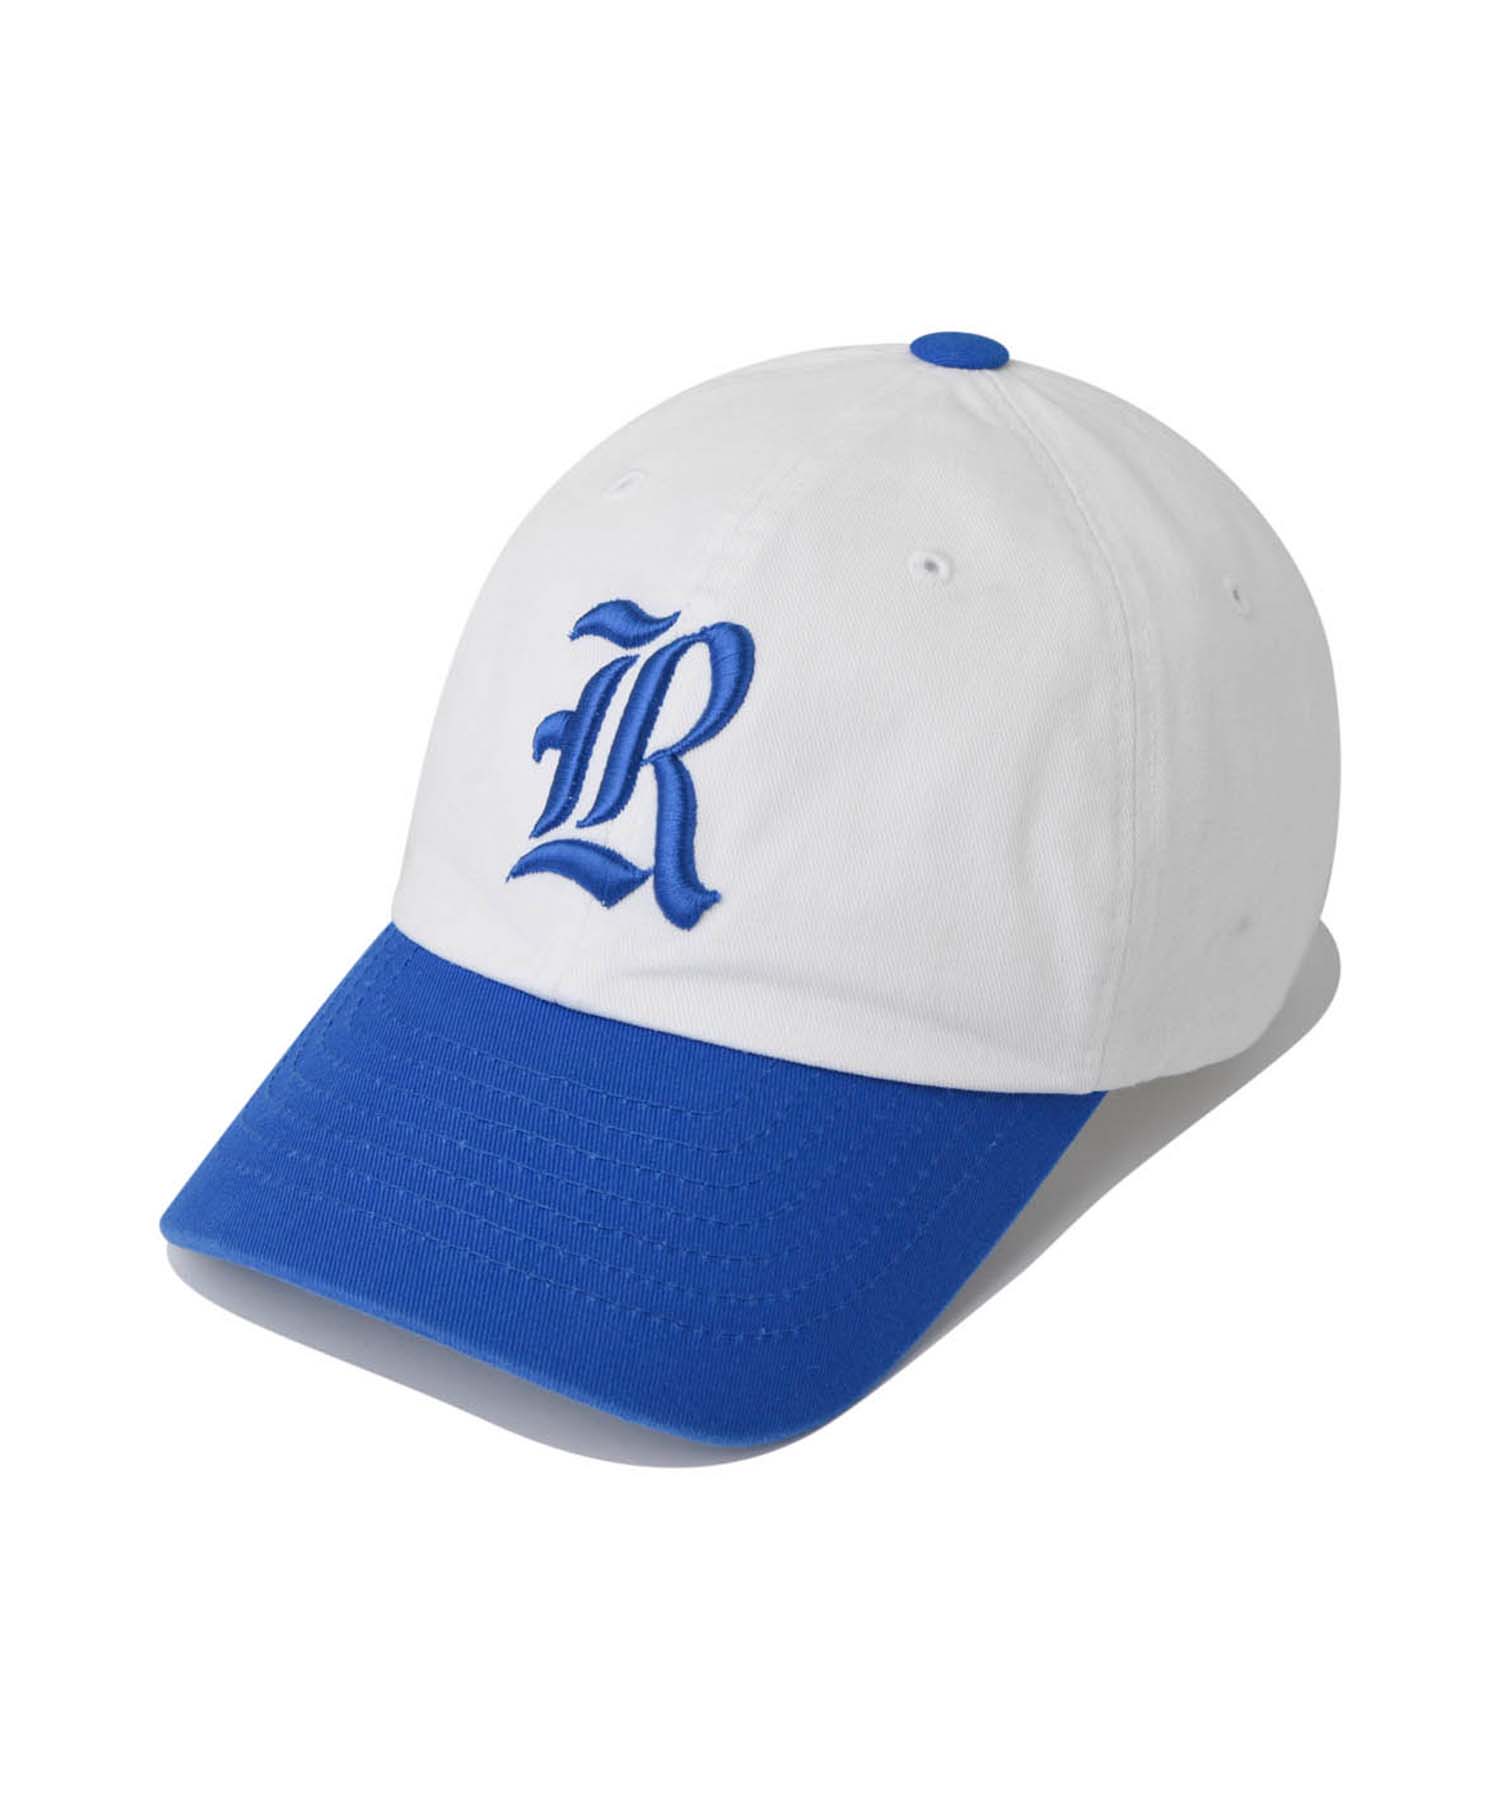 R SYMBOL BALL CAP [WHITE]